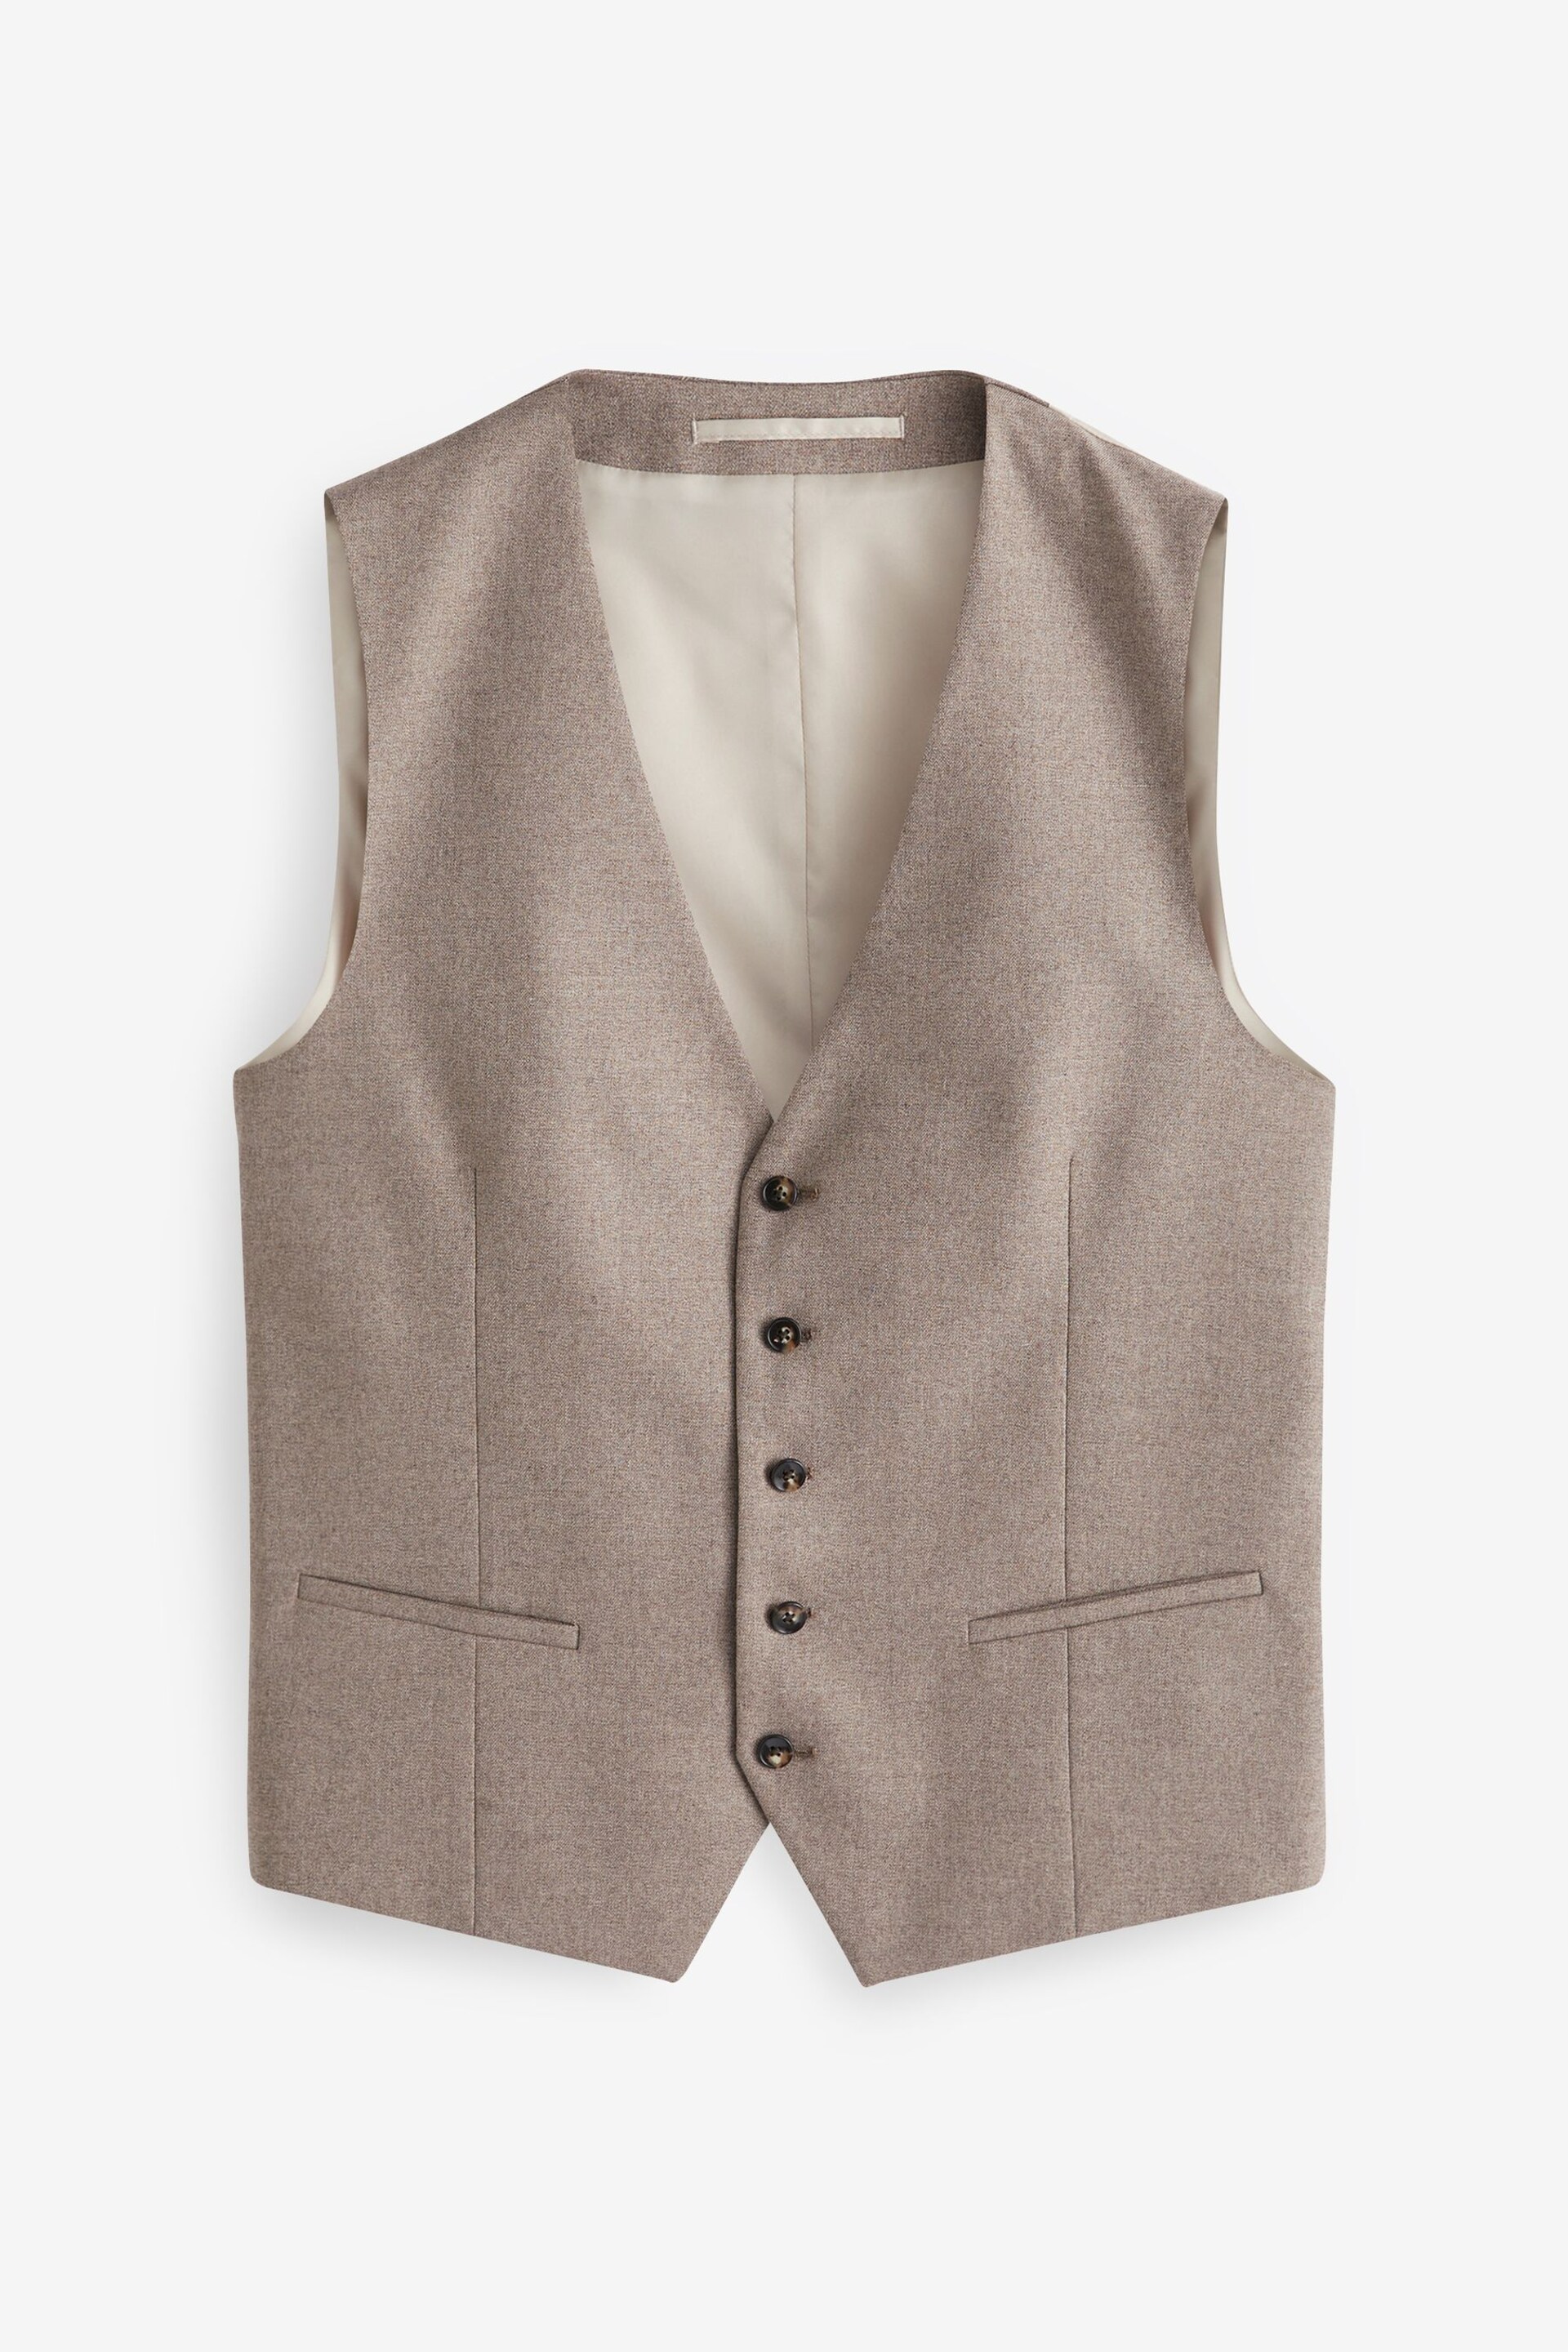 Skopes Jodrell Marl Tweed Suit: Waistcoat - Image 1 of 2